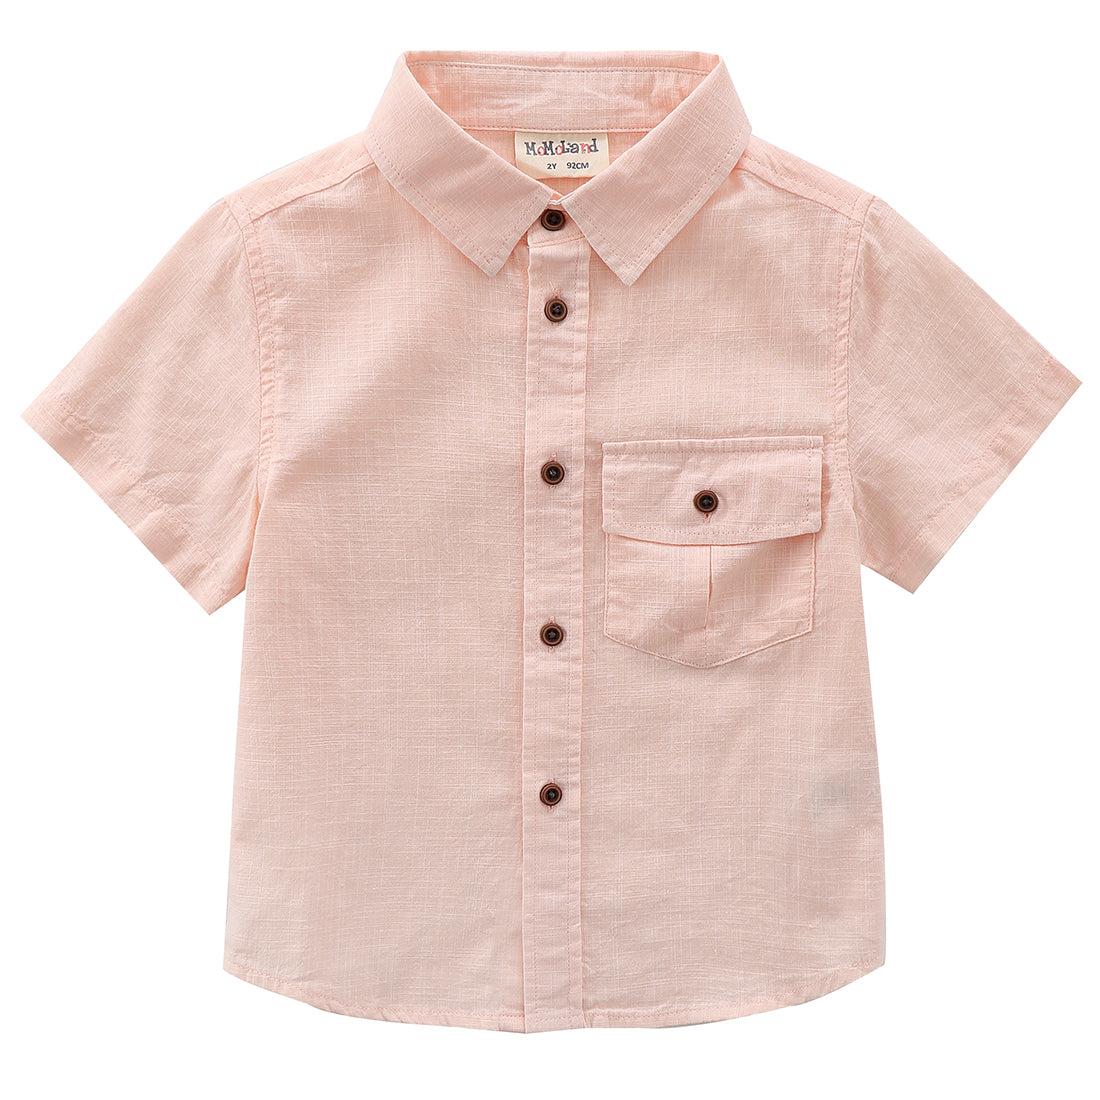 Boy Short Sleeves Fake Linen pink shirt front